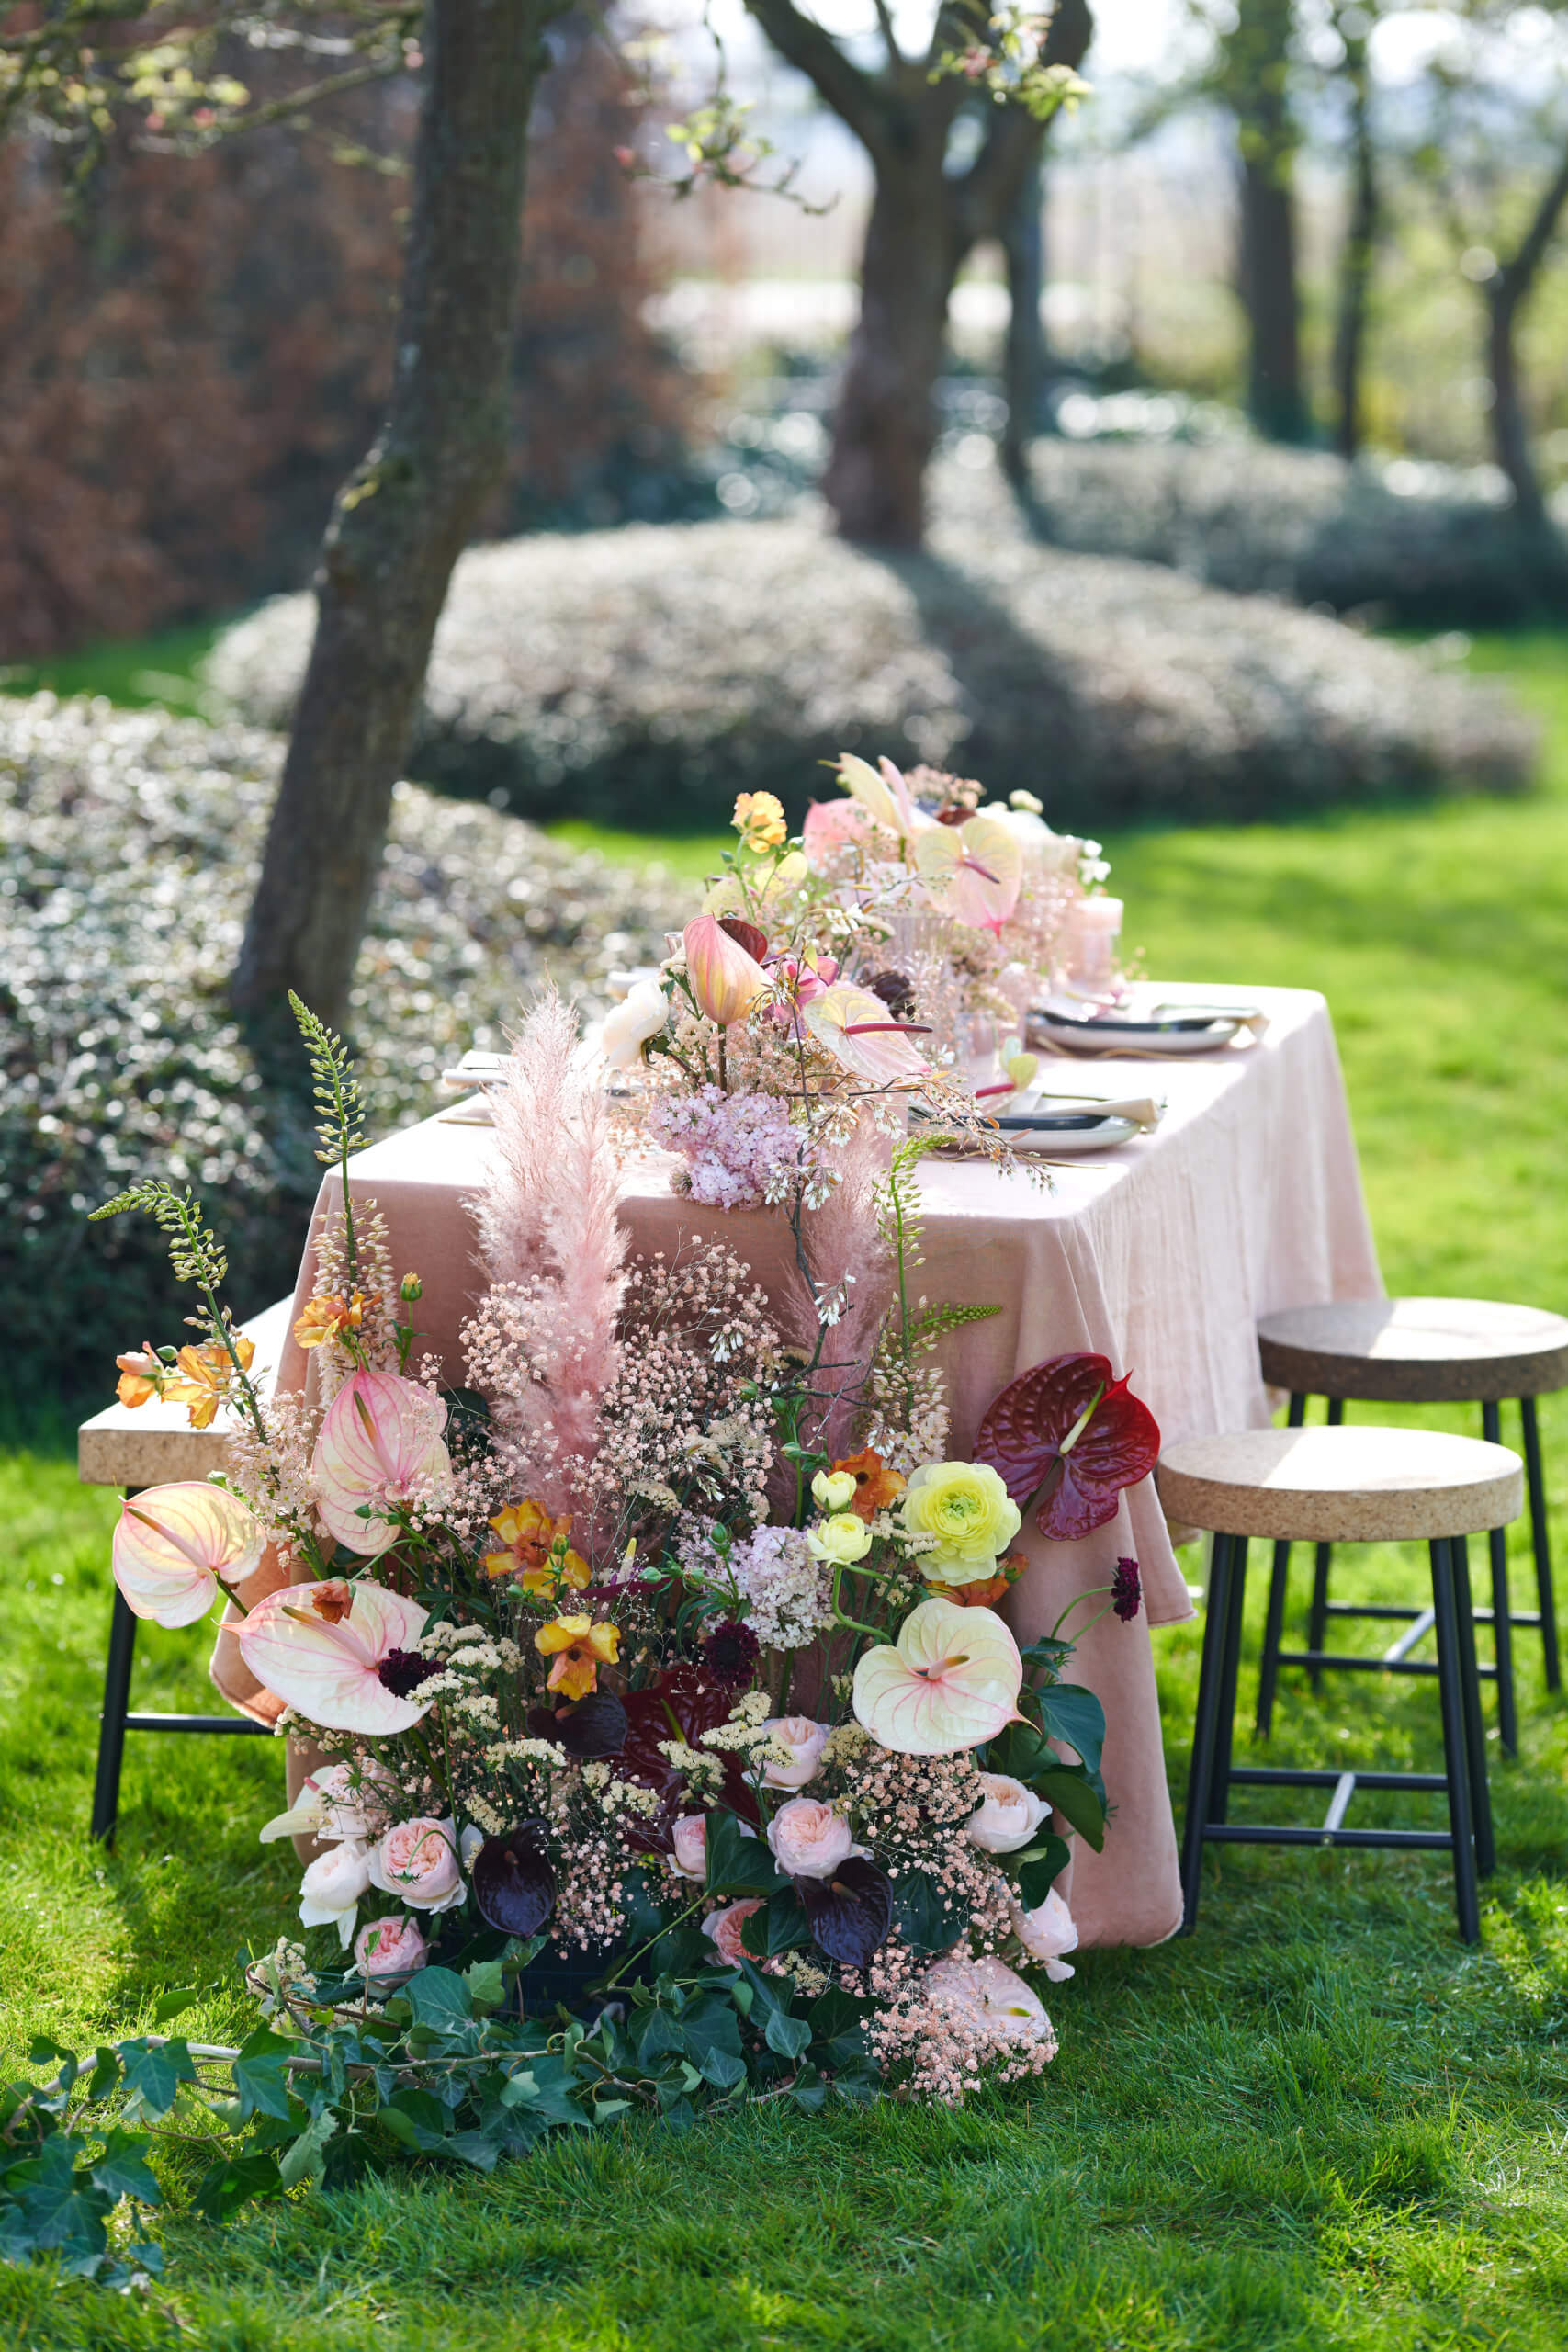 Wedding decoration ideas with Anthurium flowers